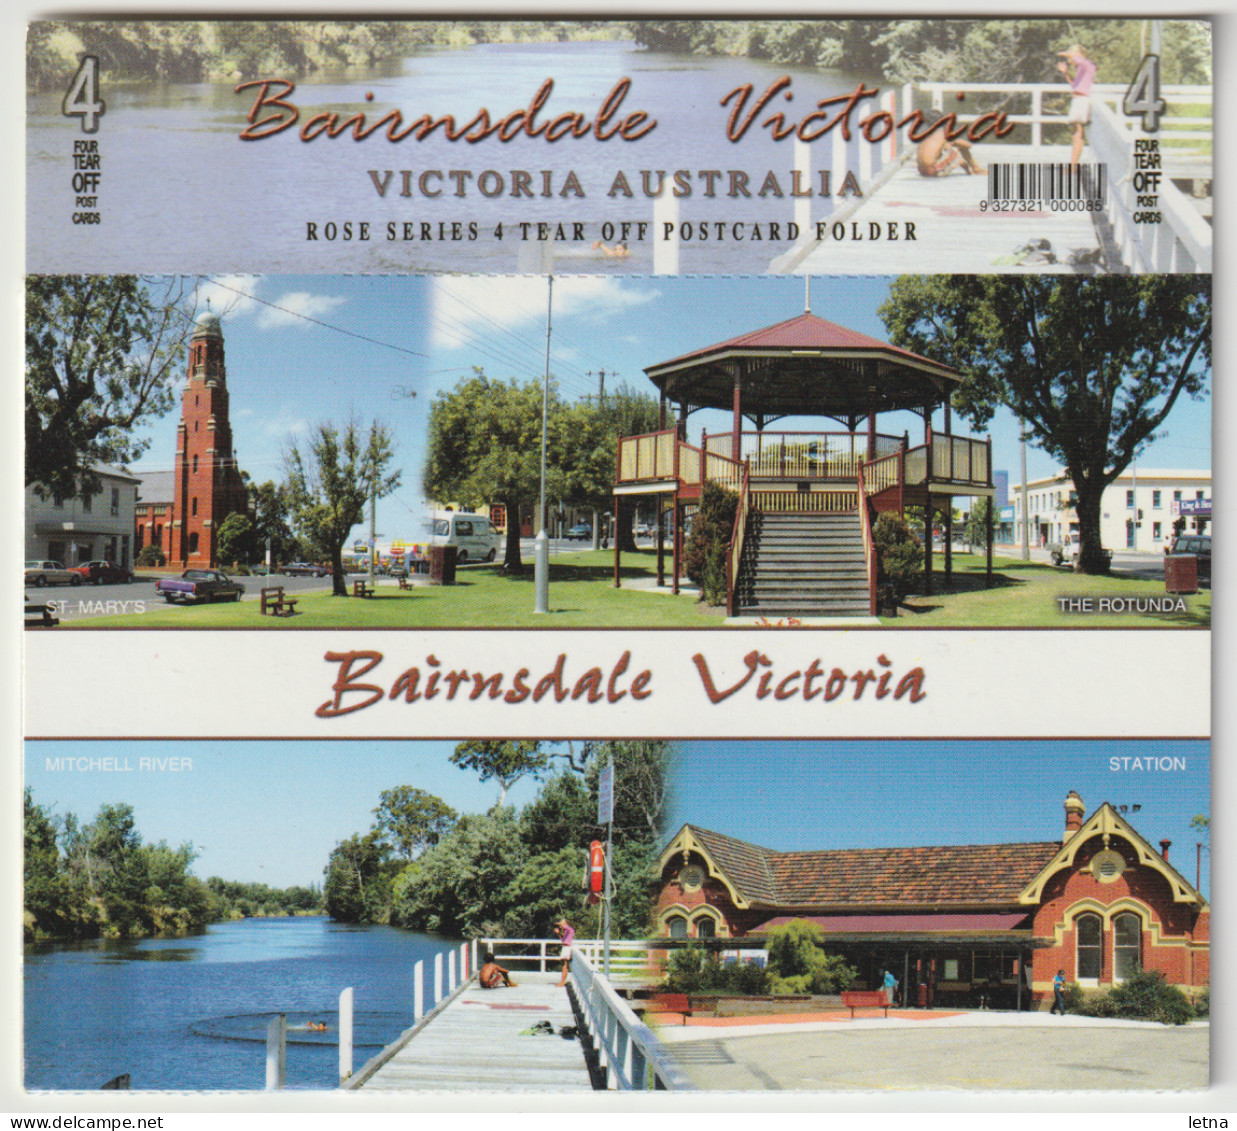 Australia VICTORIA VIC Rotunda Courthouse Aerial BAIRNSDALE Postcard 4pack 1990s - Gippsland